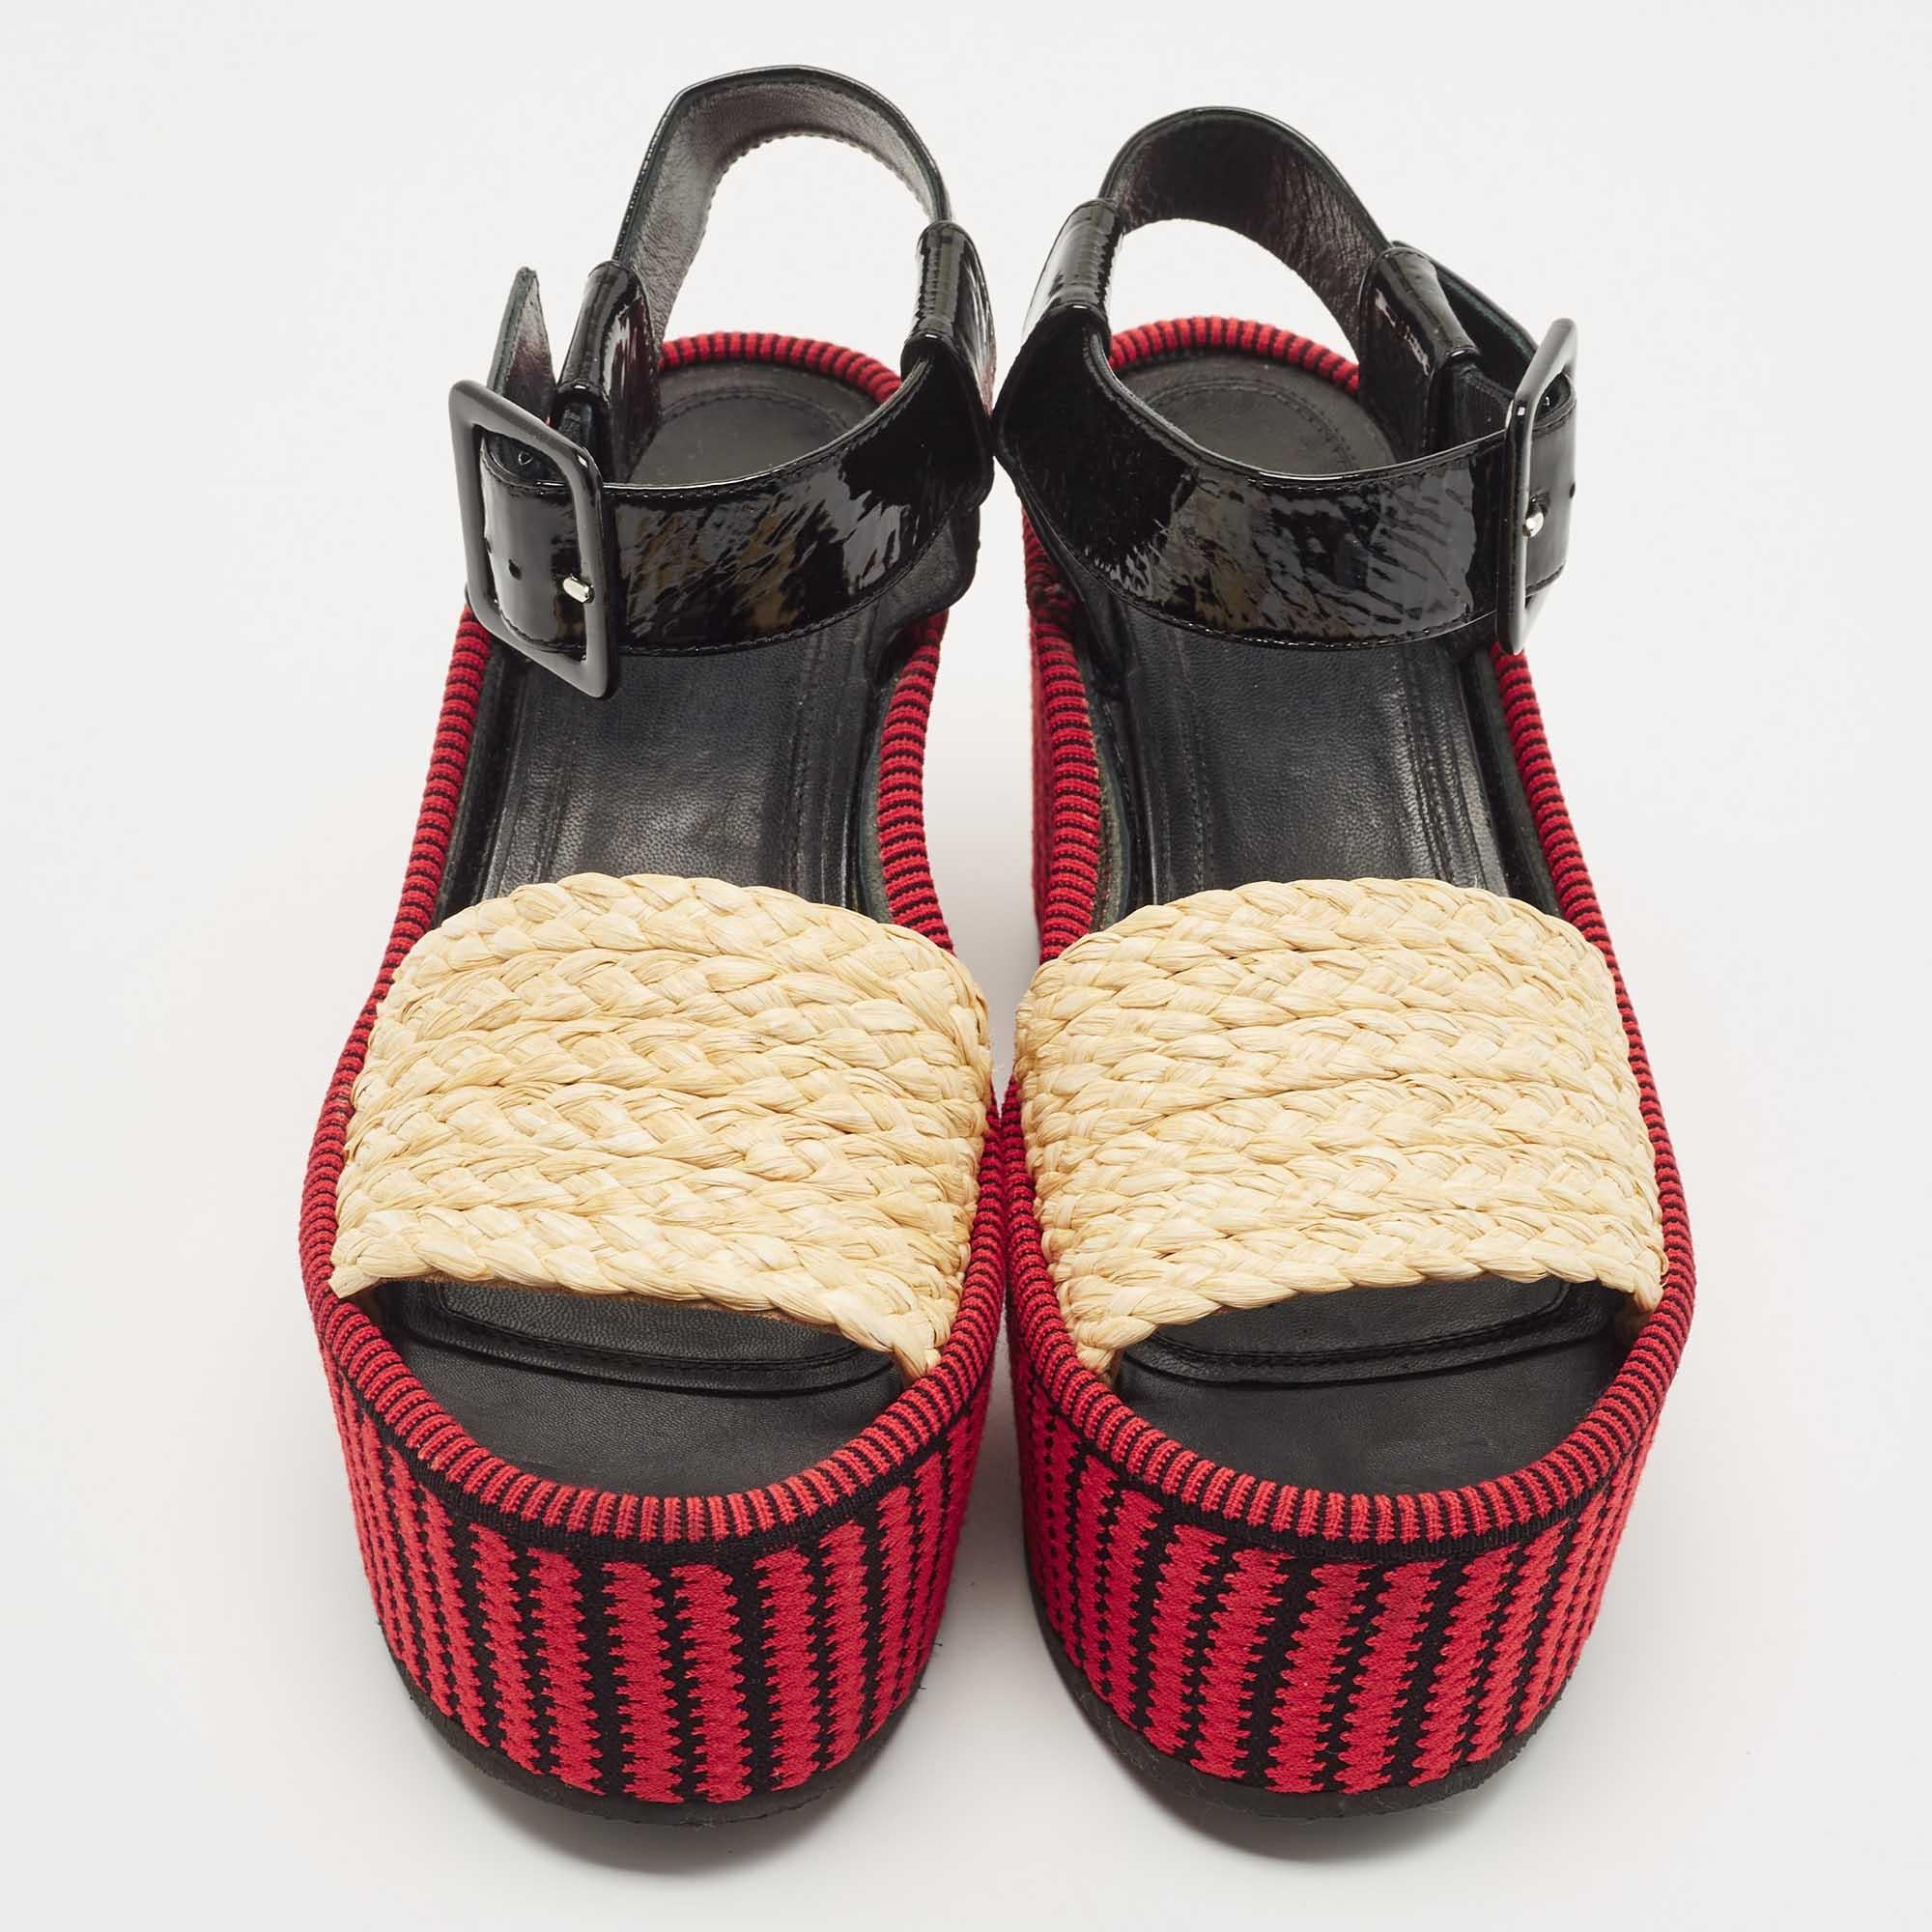 Celine Multicolor Patent and Raffia Wedge Striped Sandals Size 37.5 4